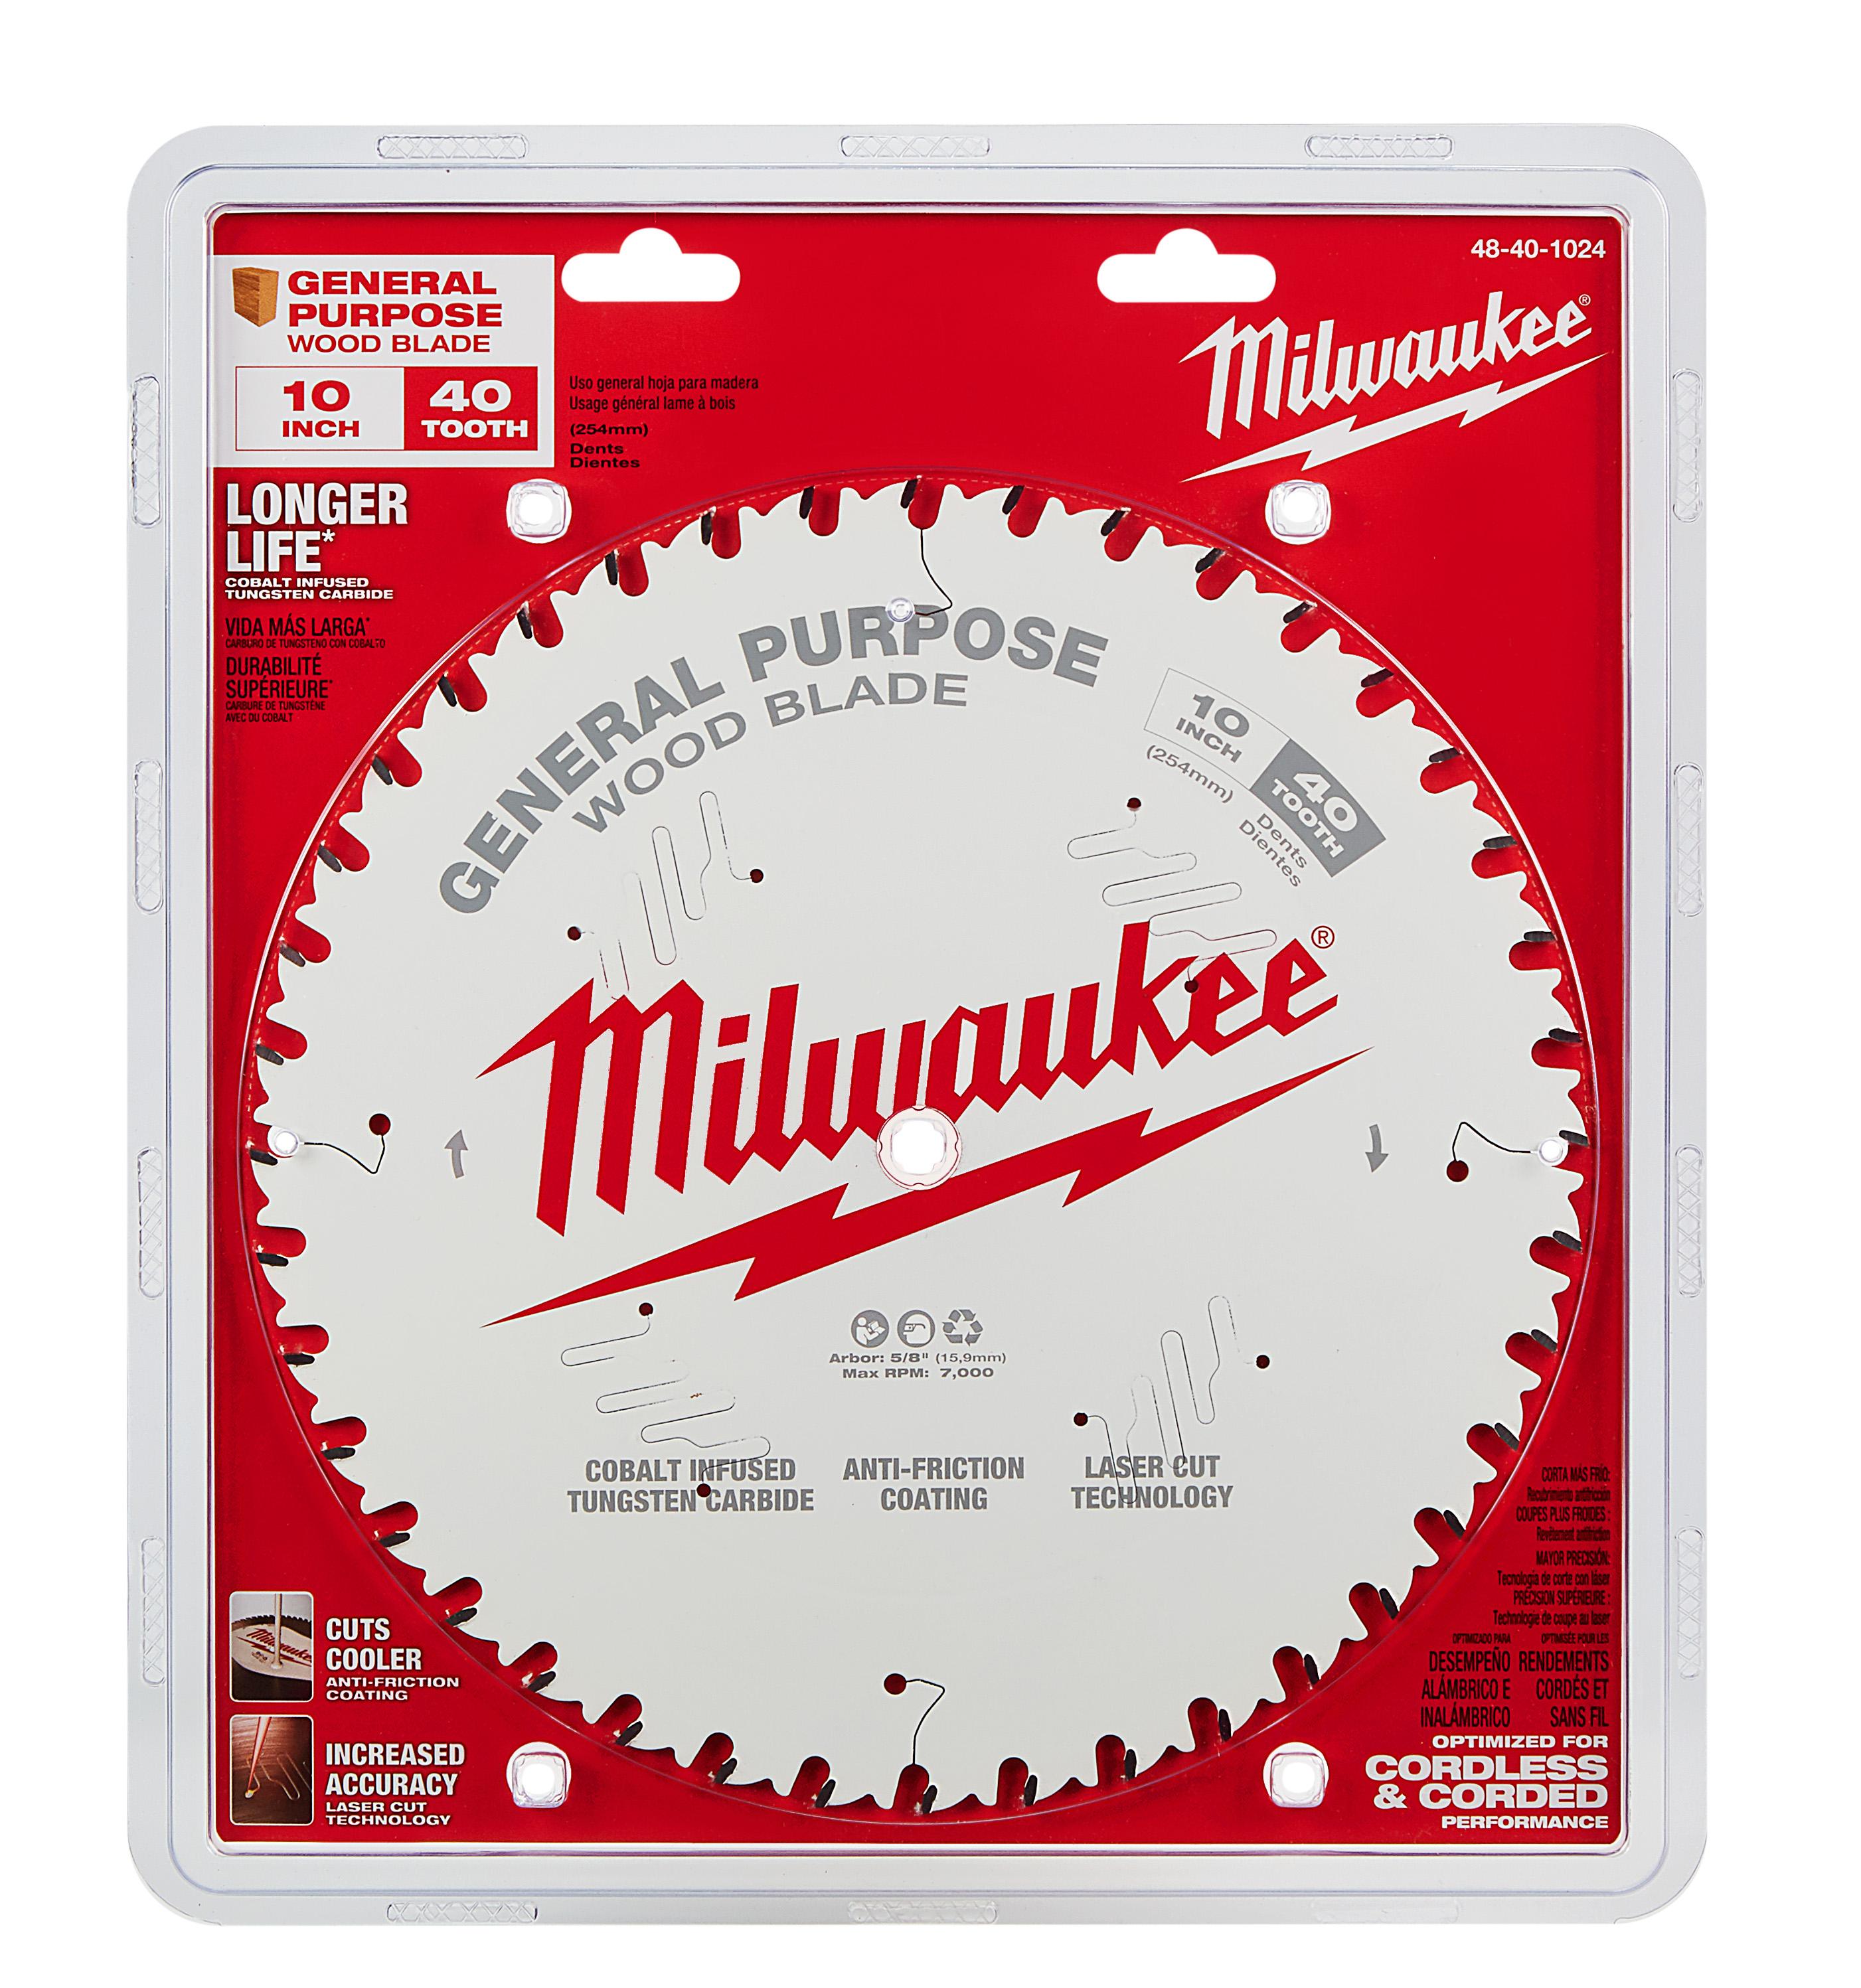 Milwaukee® 48-40-0822 Fine Finish Thin Kerf Circular Saw Blade, 8-1/4 in Dia x 1.05 in THK, 5/8 in Arbor, Carbide Blade, 40 Teeth